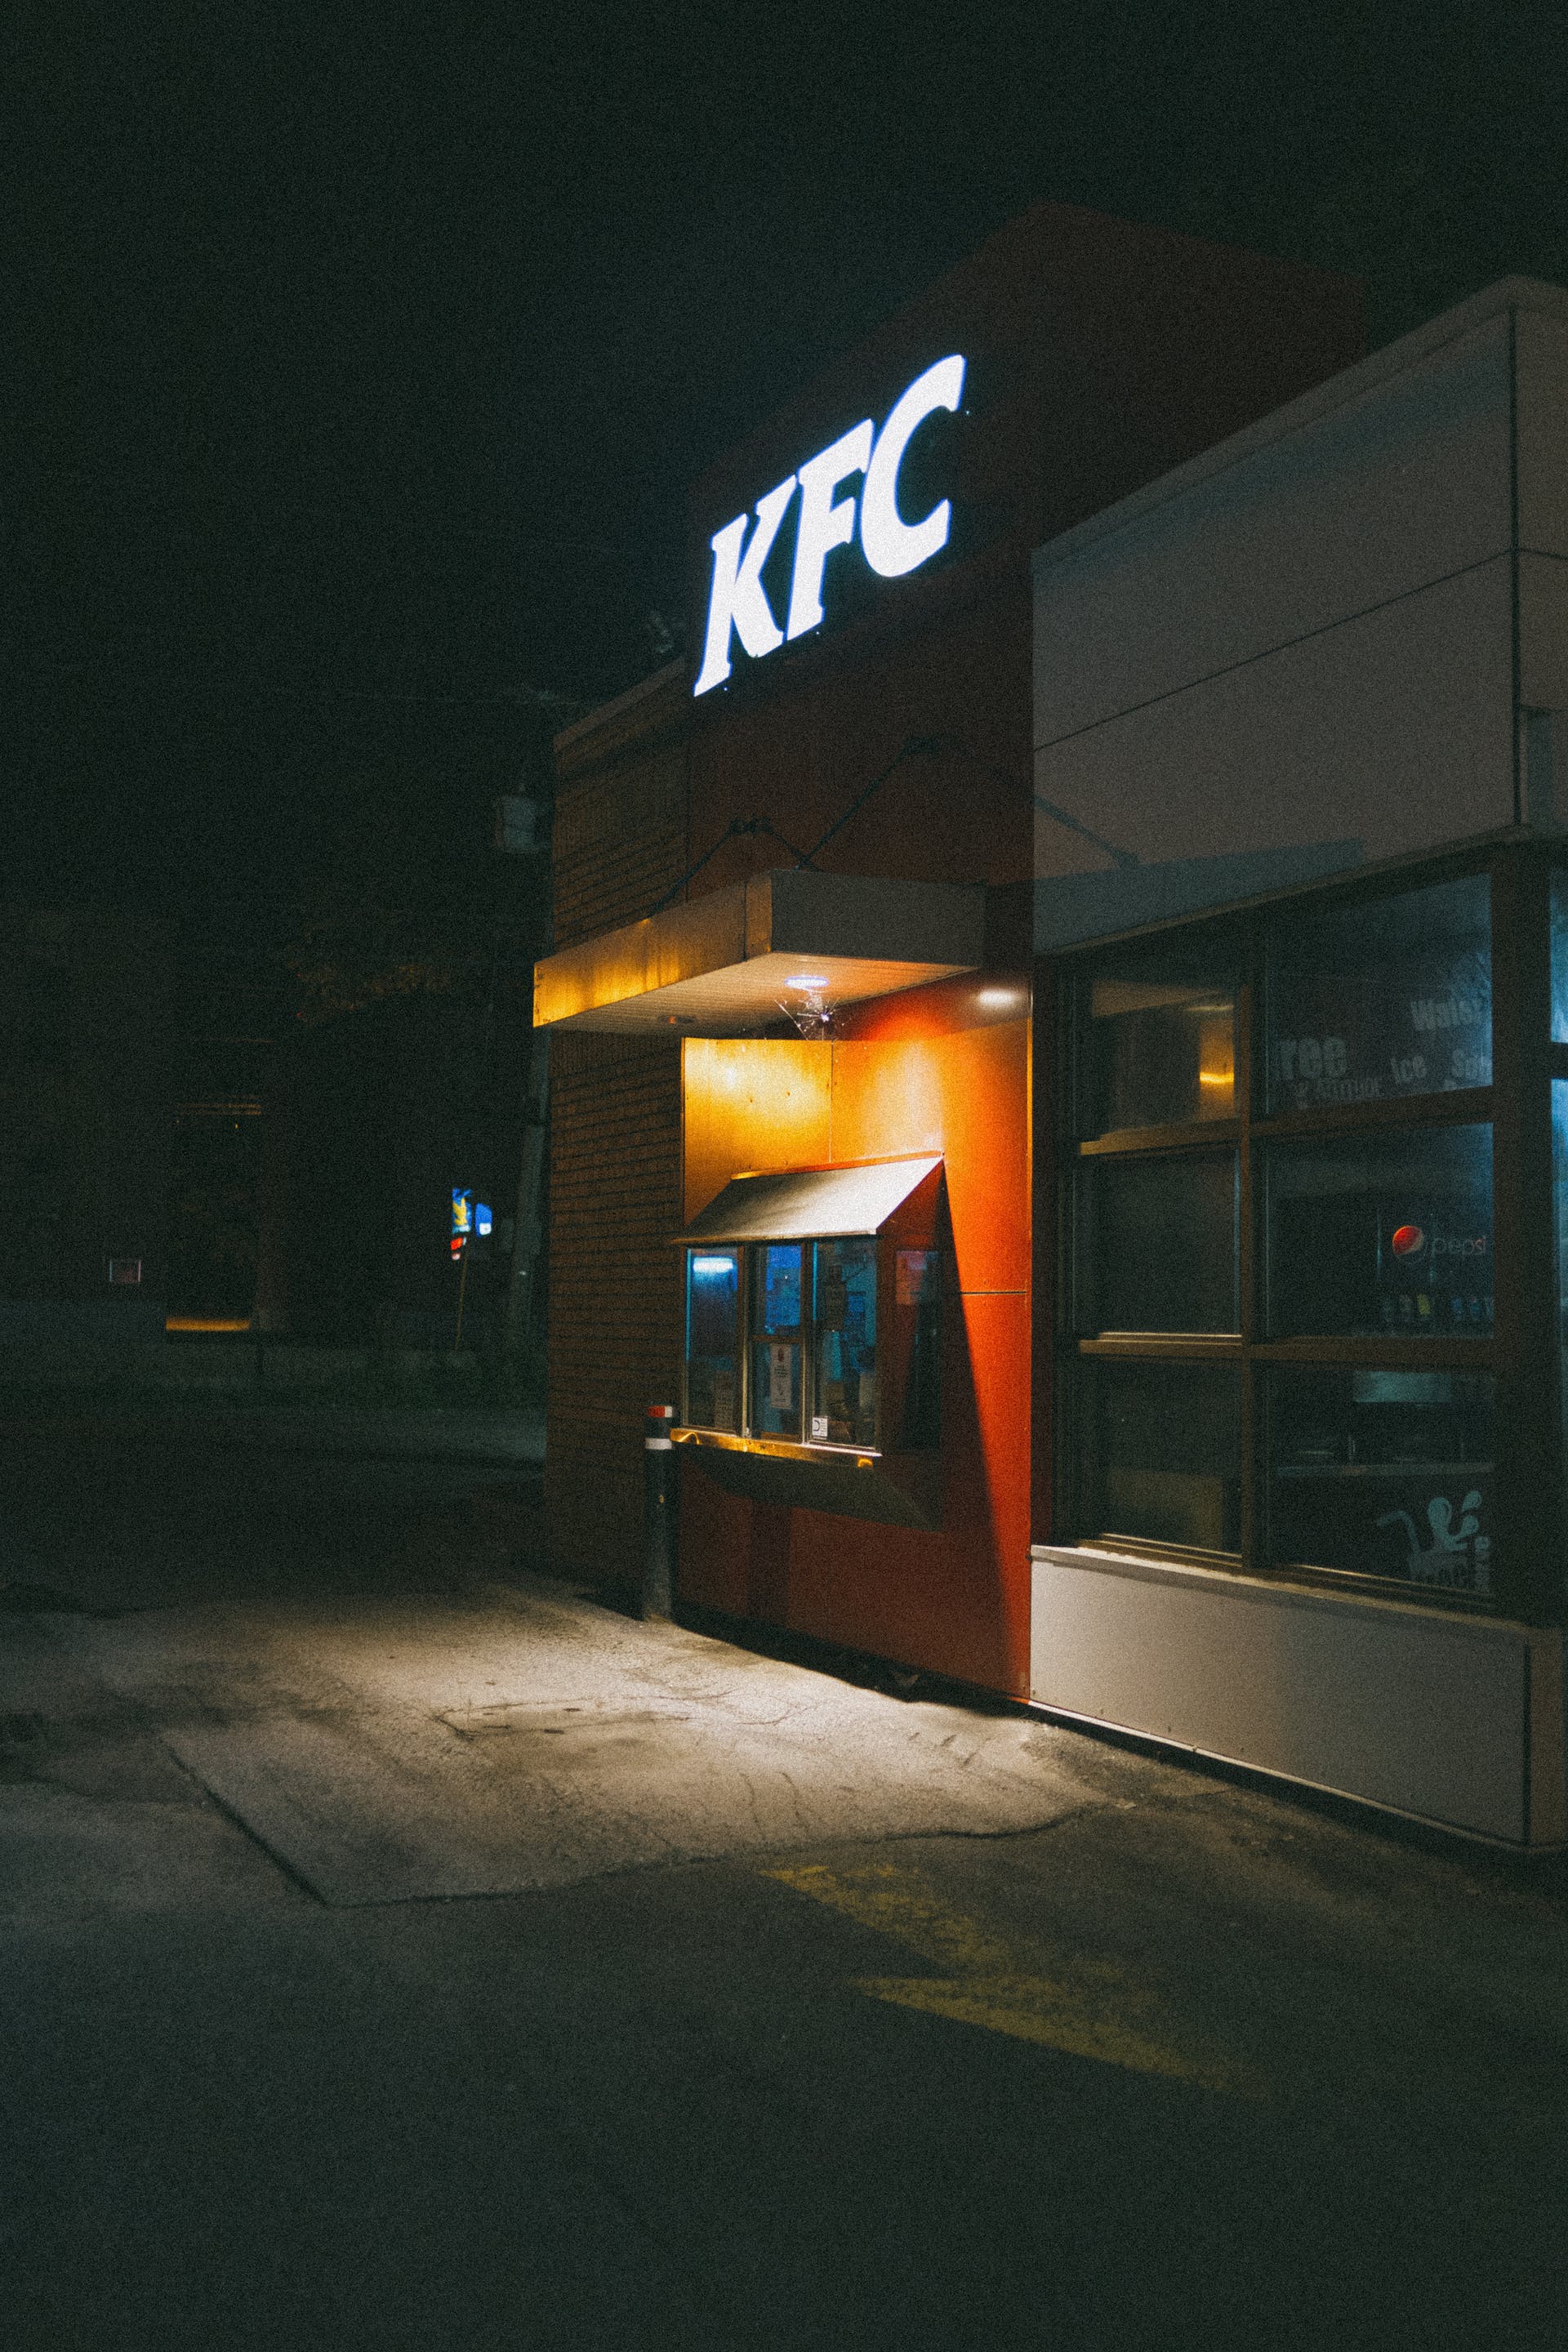 A KFC restaurant at night | Source: Pexels